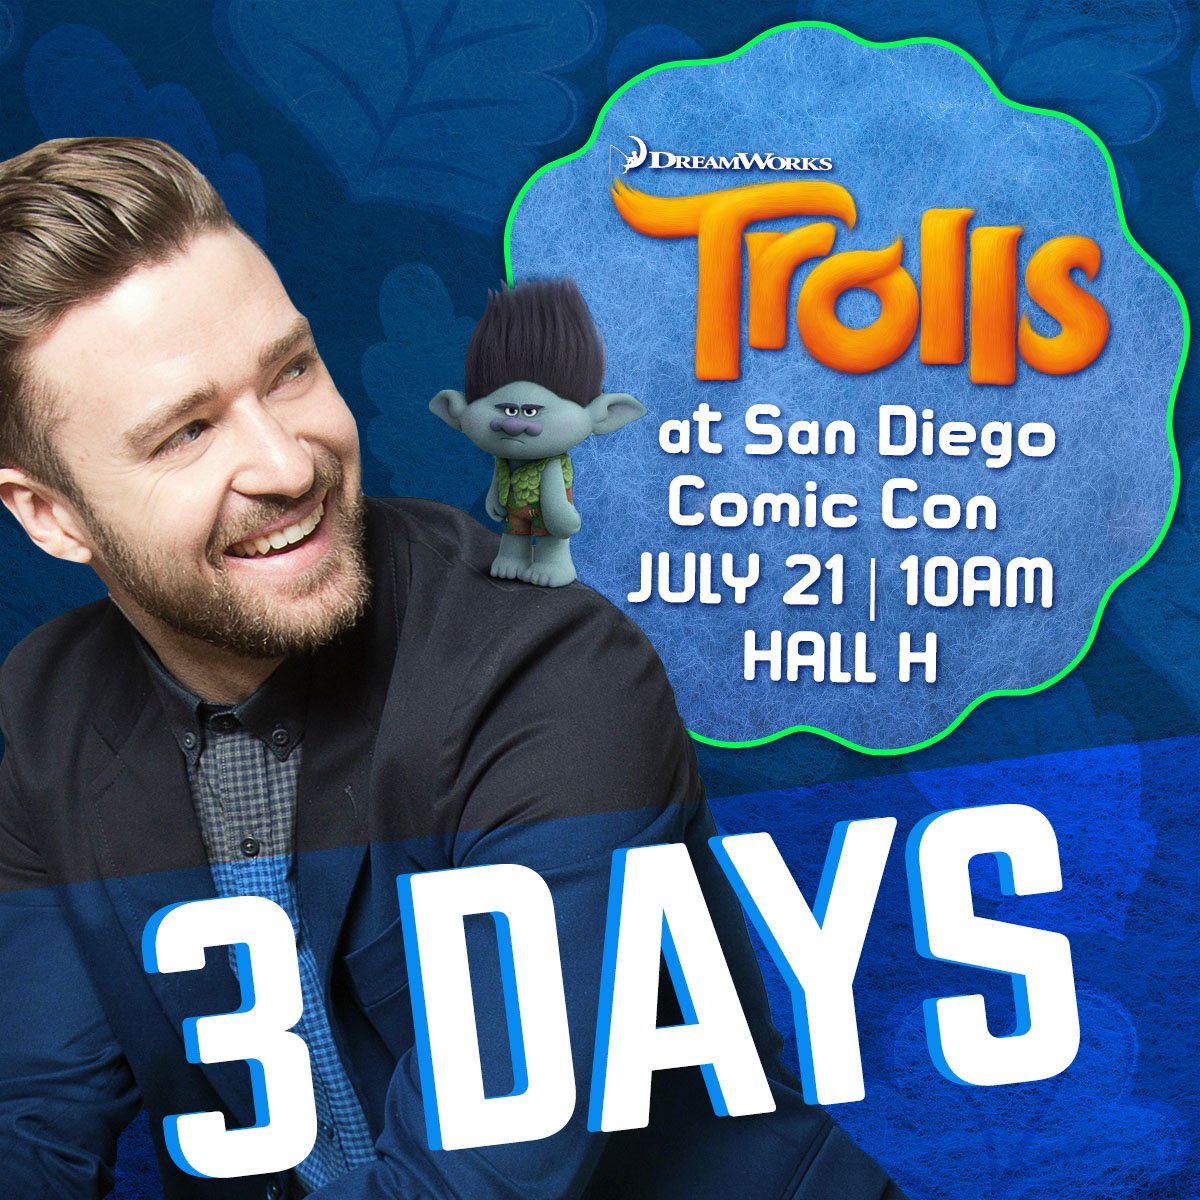 RT @Trolls: 3 DAYS until @jtimberlake & #DreamWorksTrolls arrive at #SDCC16 Hall H! https://t.co/u5SpOonZ6R